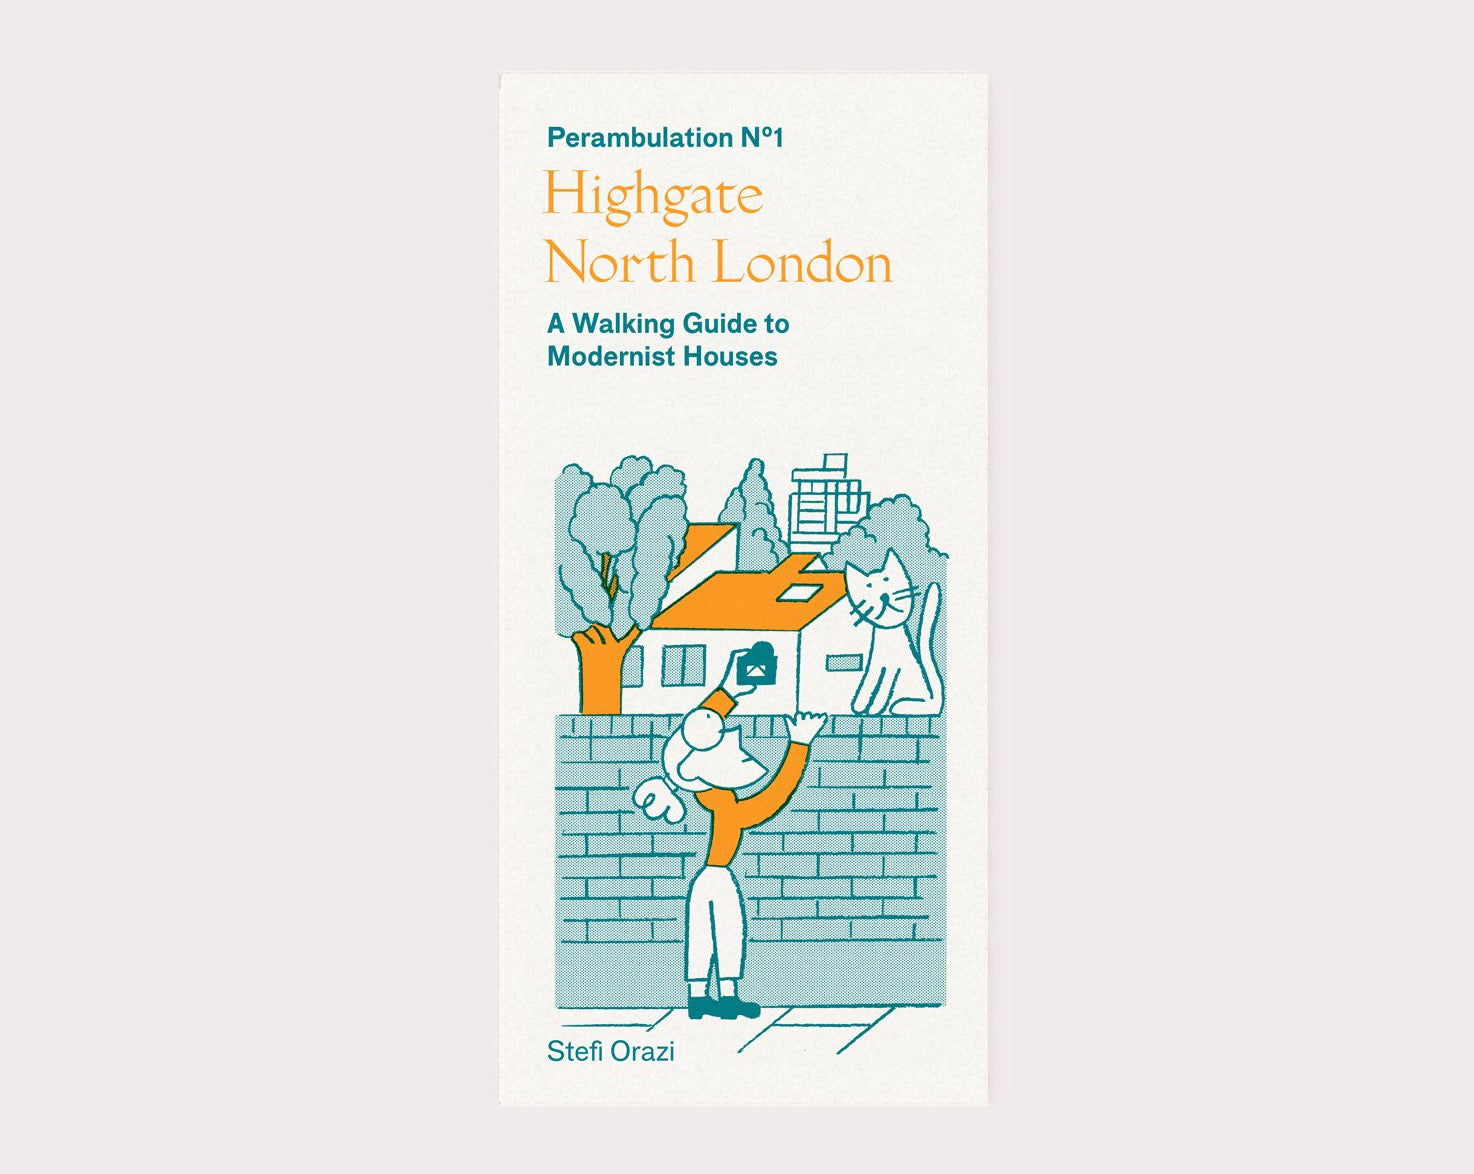 Perambulation Nº1—A Walking Guide to Modernist Houses in Highgate, North London by Stefi Orazi